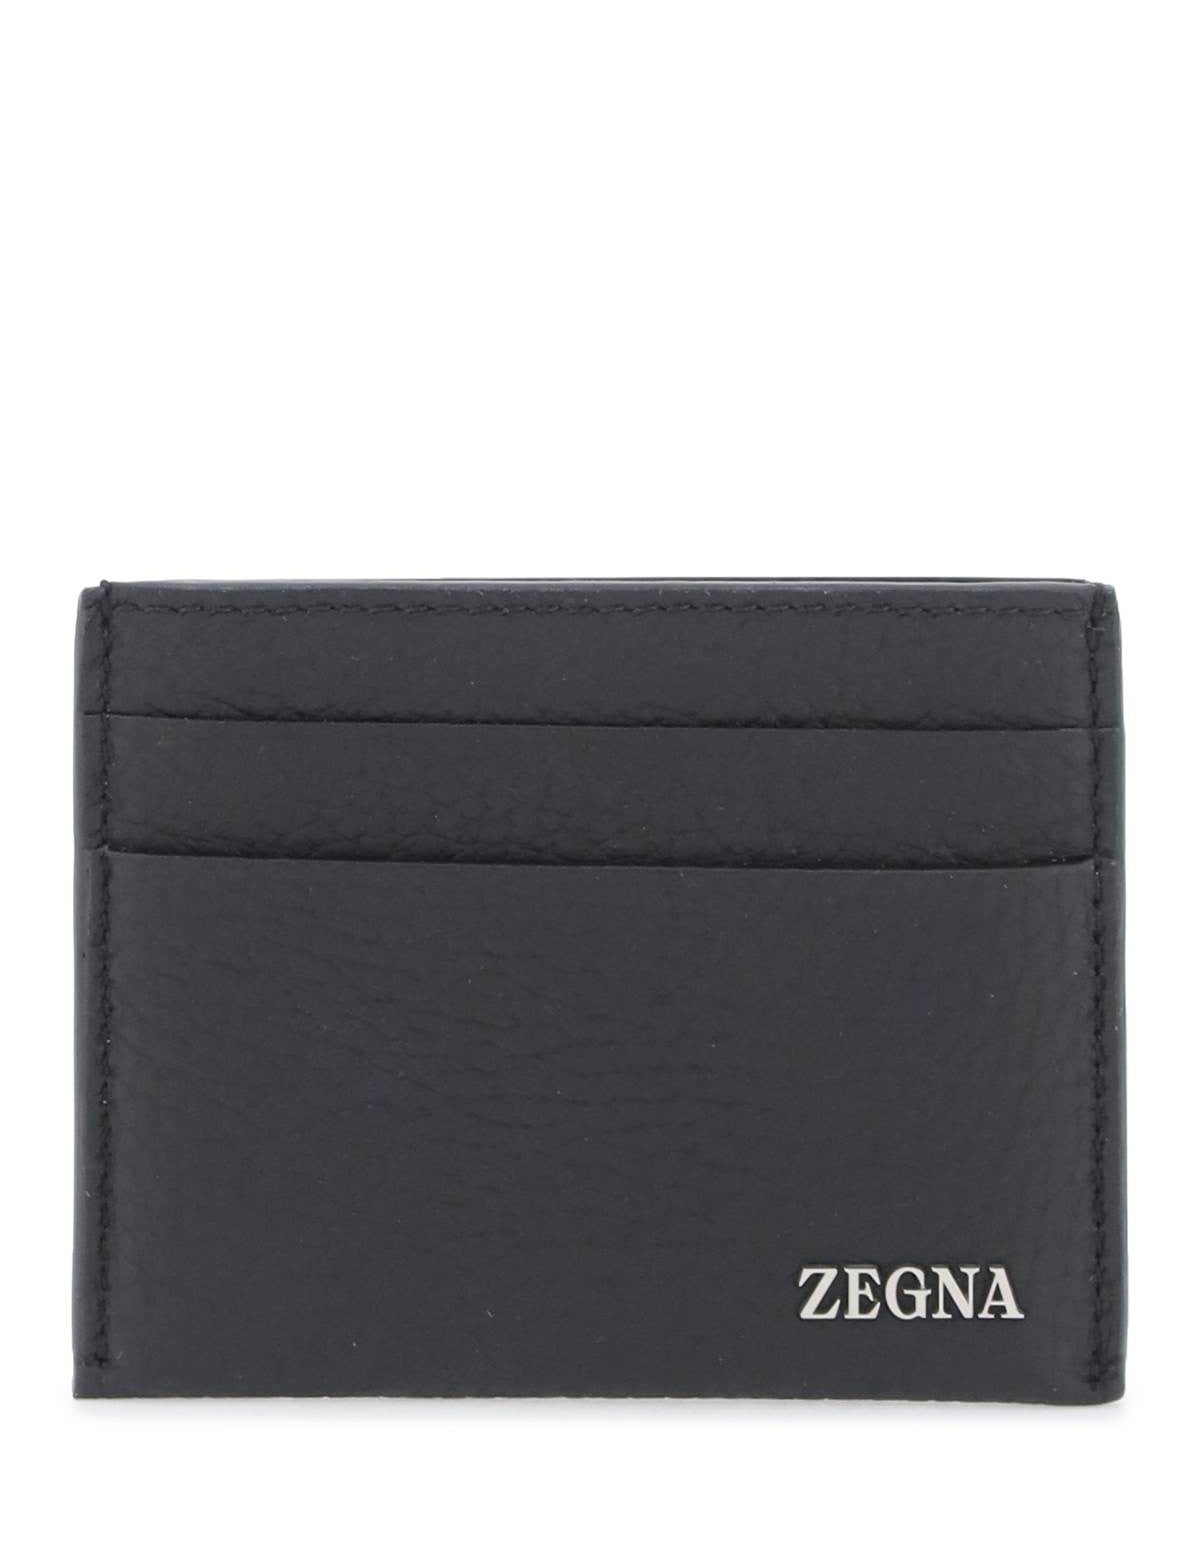 zegna-leather-cardholder_dfa991a6-4318-4a92-8013-1c6f052f2619.jpg